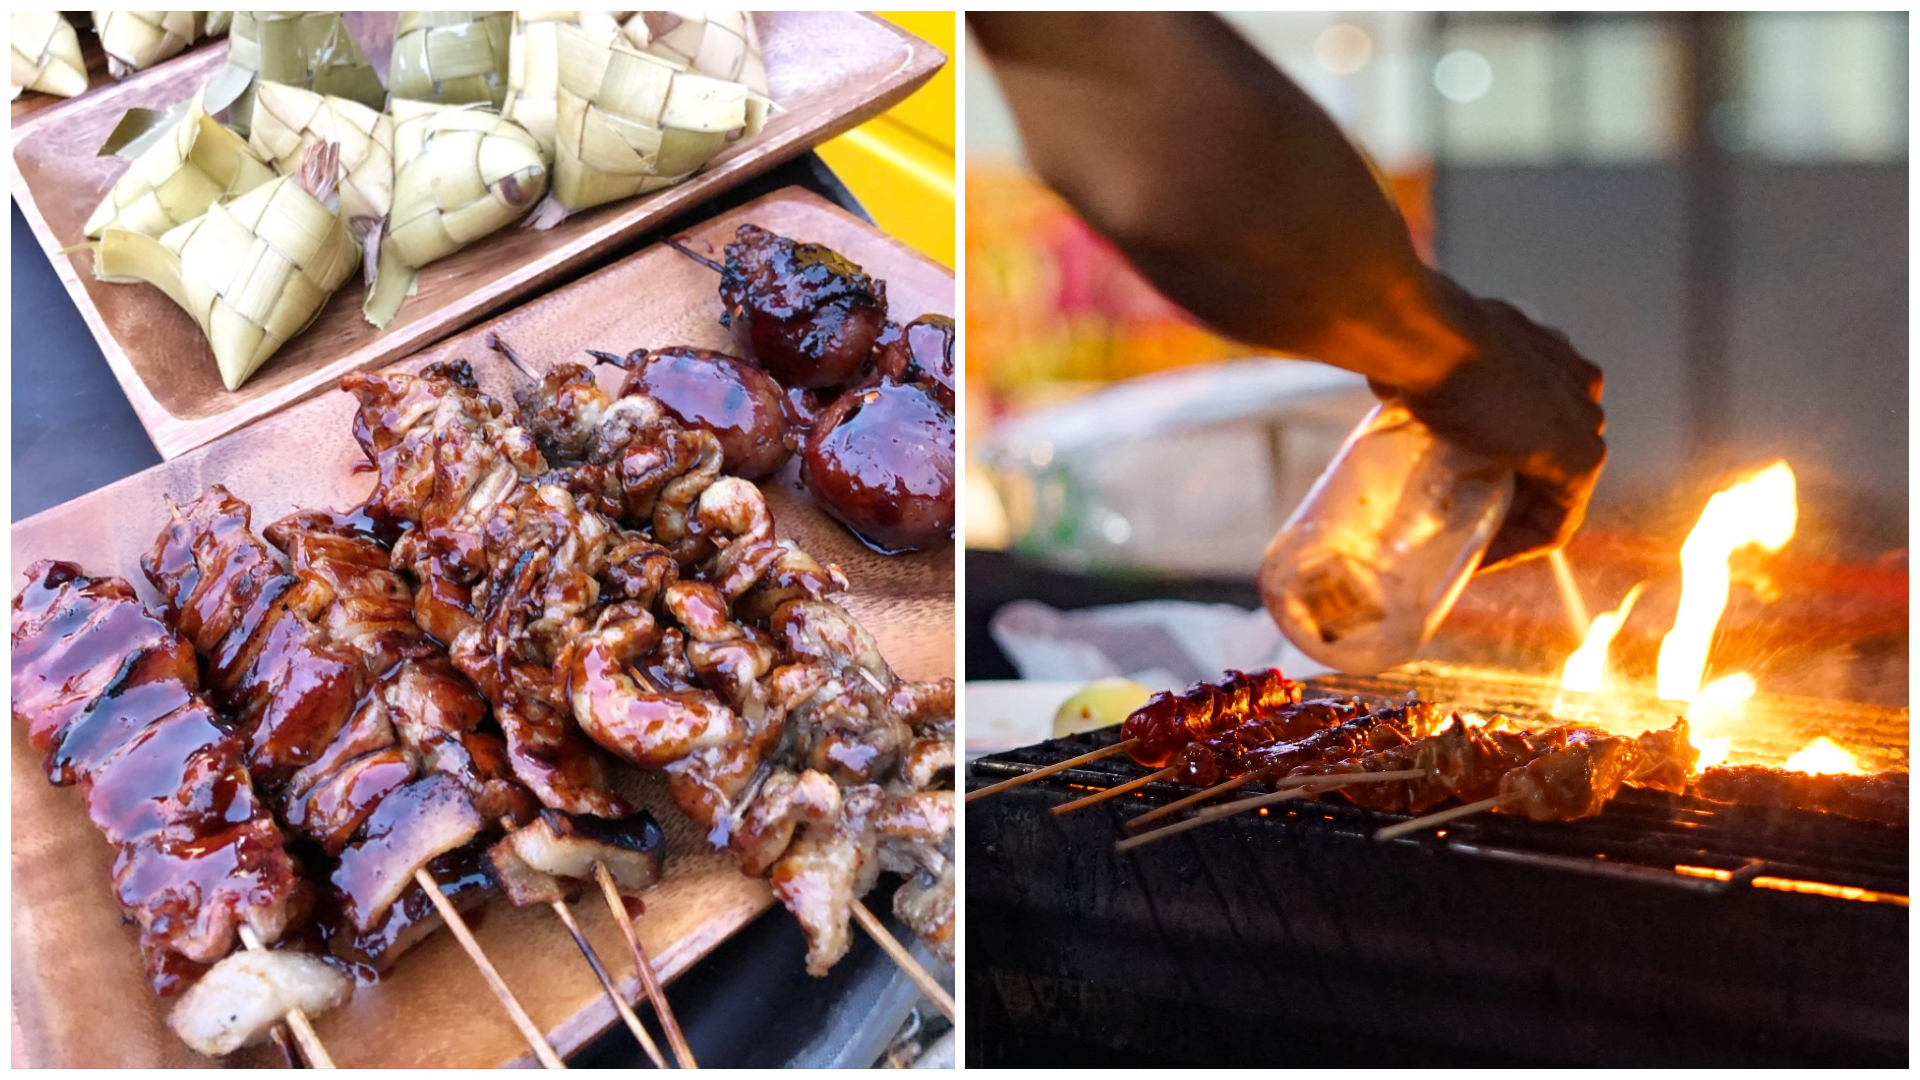 Where to find the Best-Tasting BBQ in Cebu?